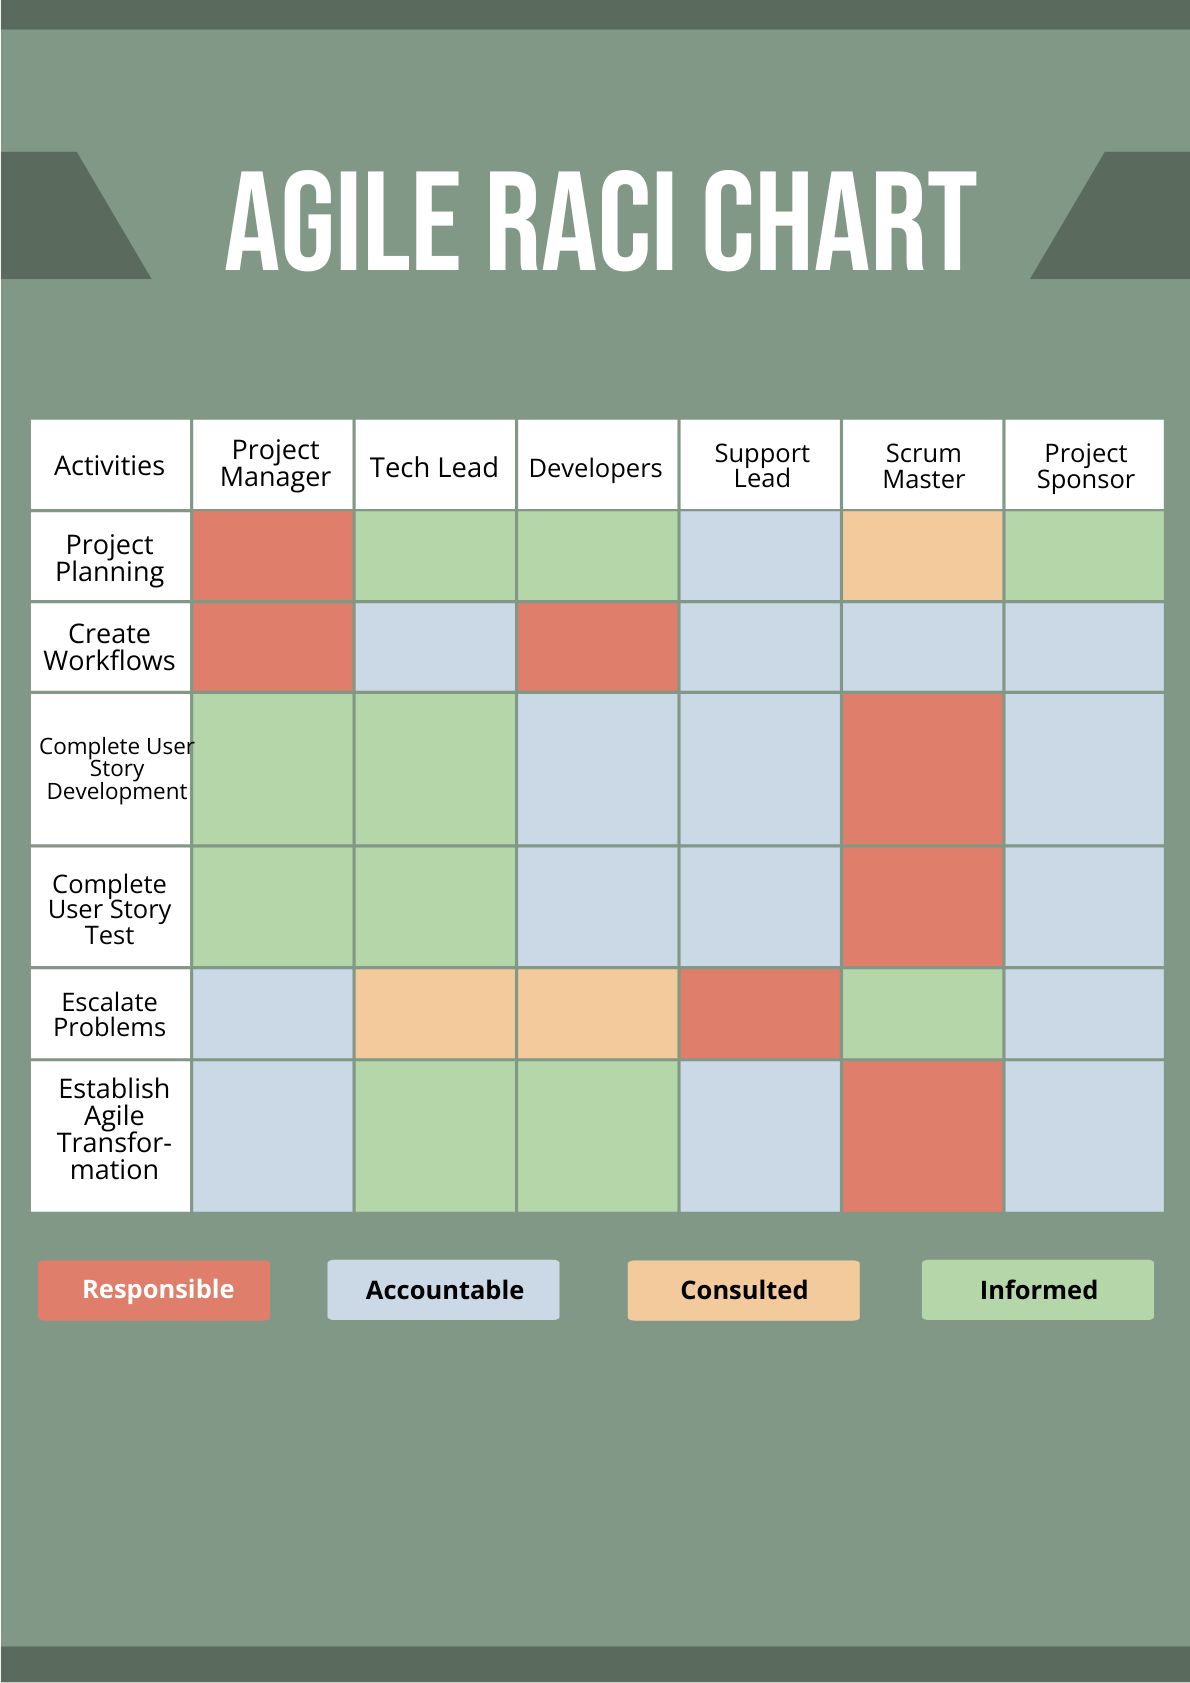 Agile RACI Chart